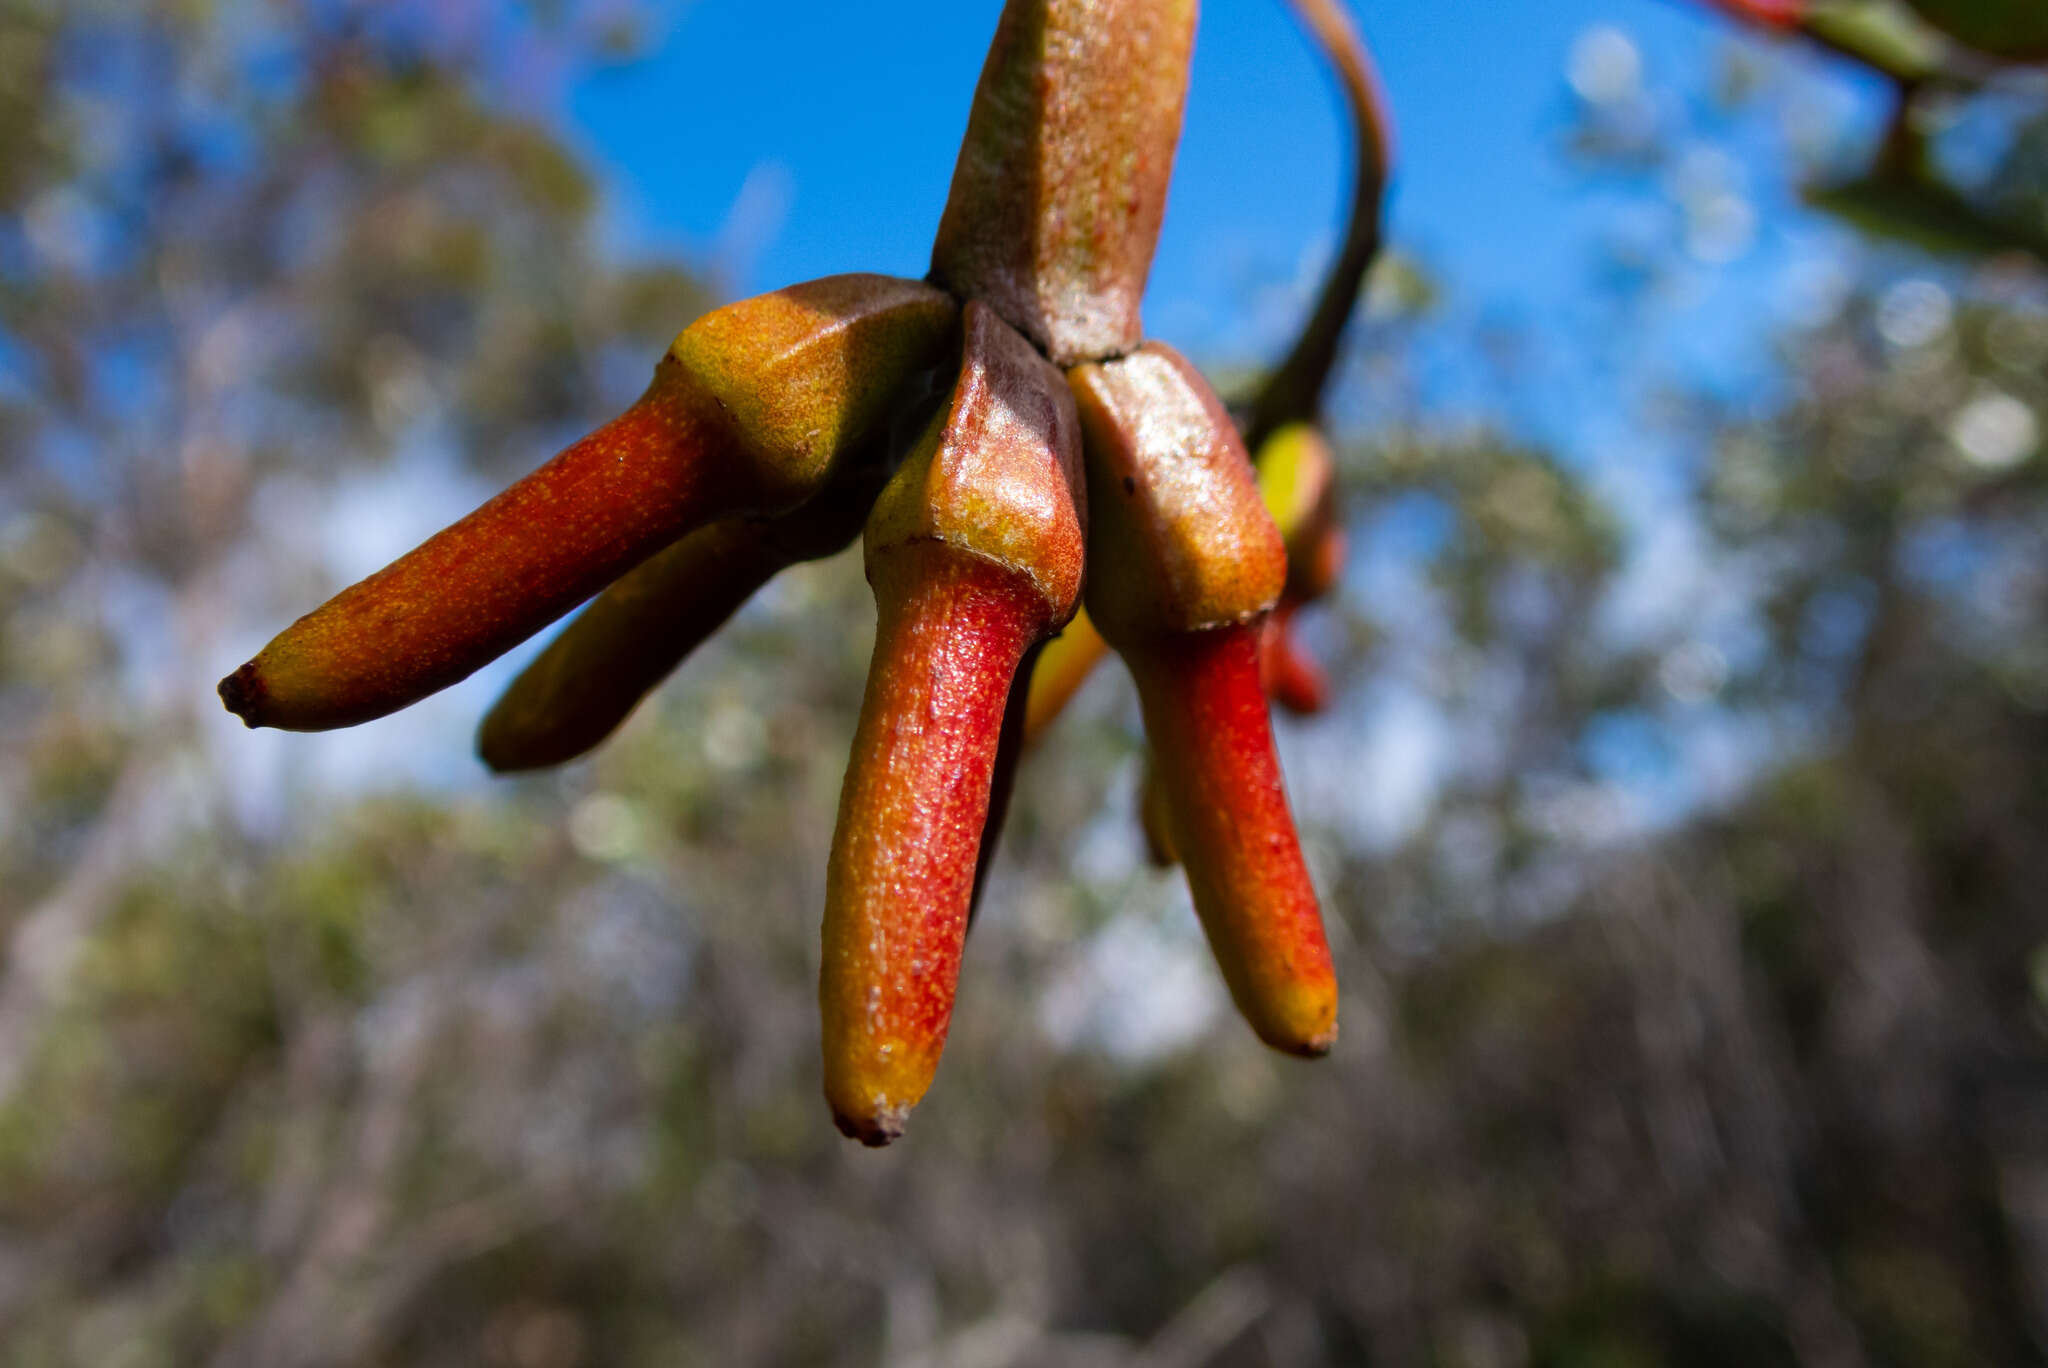 Image of Eucalyptus platypus subsp. platypus